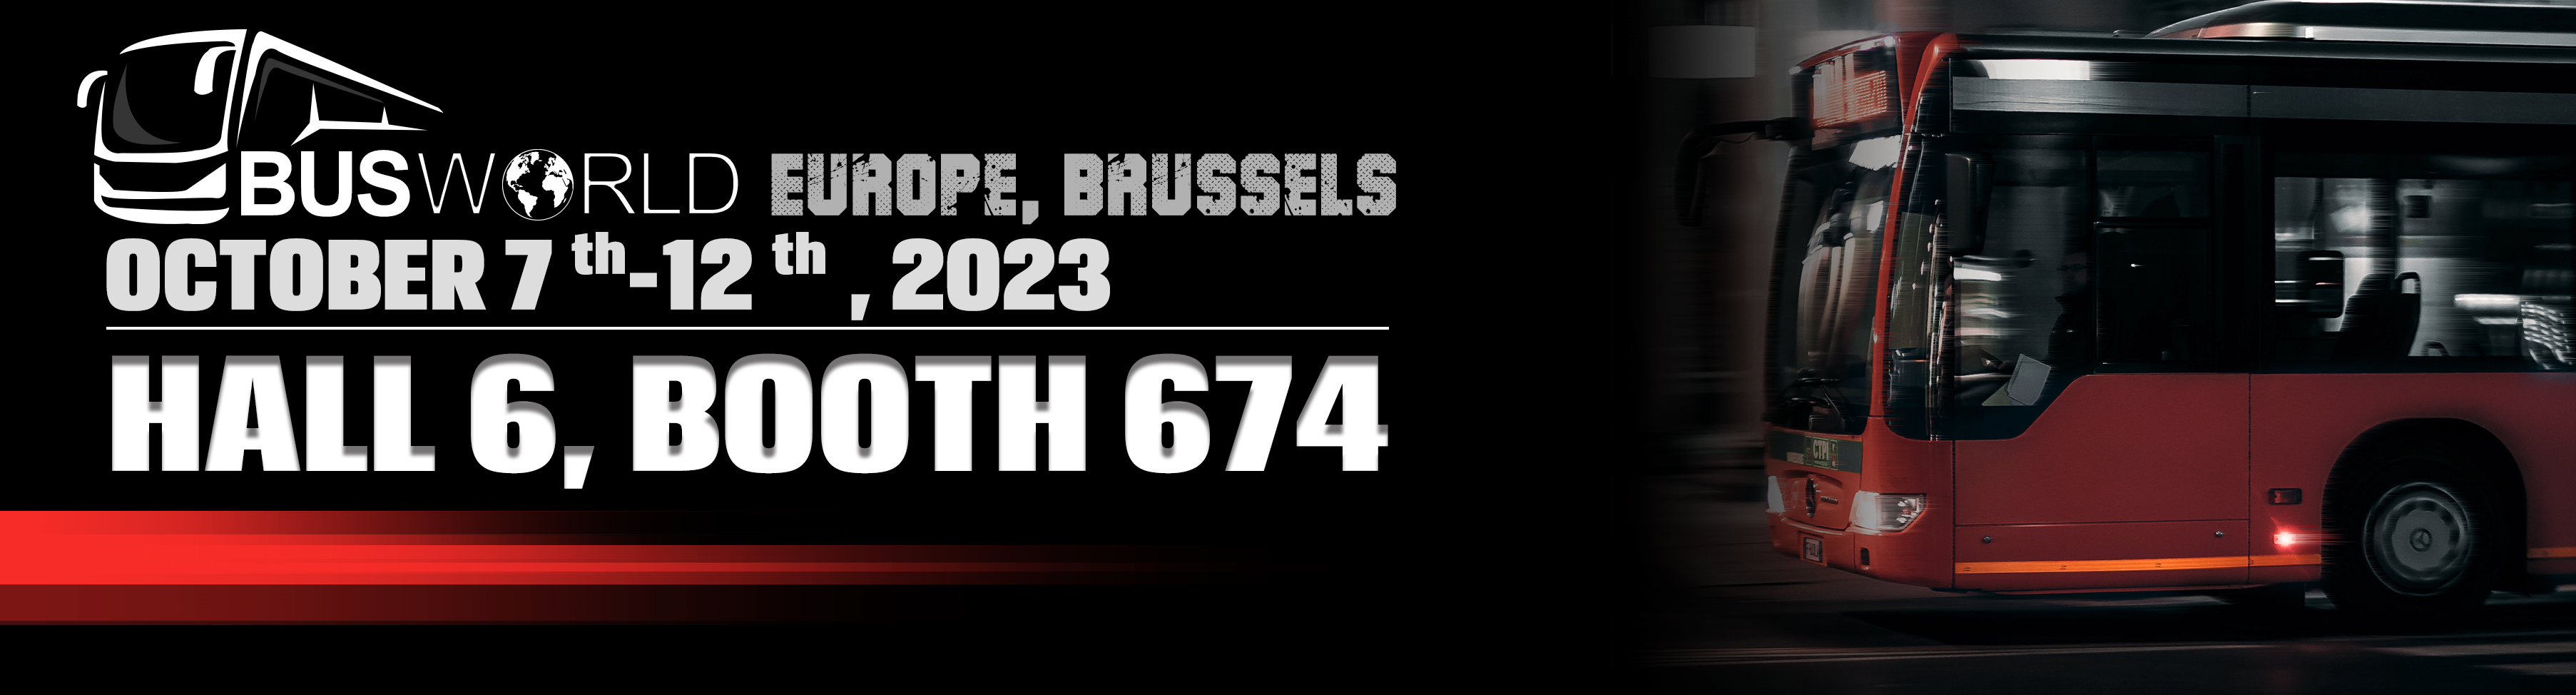 Busworld Europe, Brussell 2023